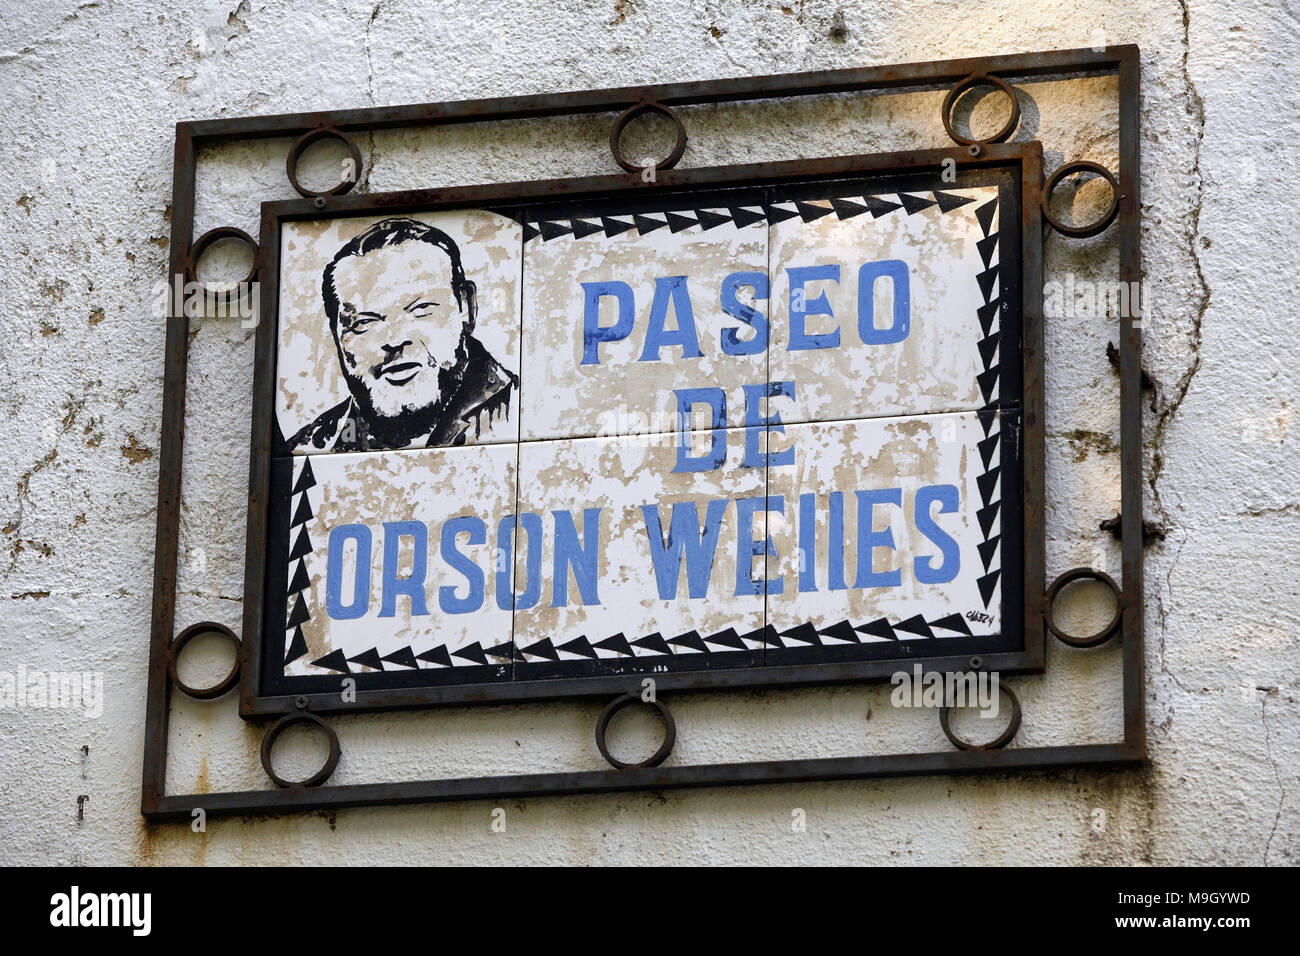 Las señales de calle, Paseo de Orson Welles, Ronda, Andalucia, Spain Foto de stock